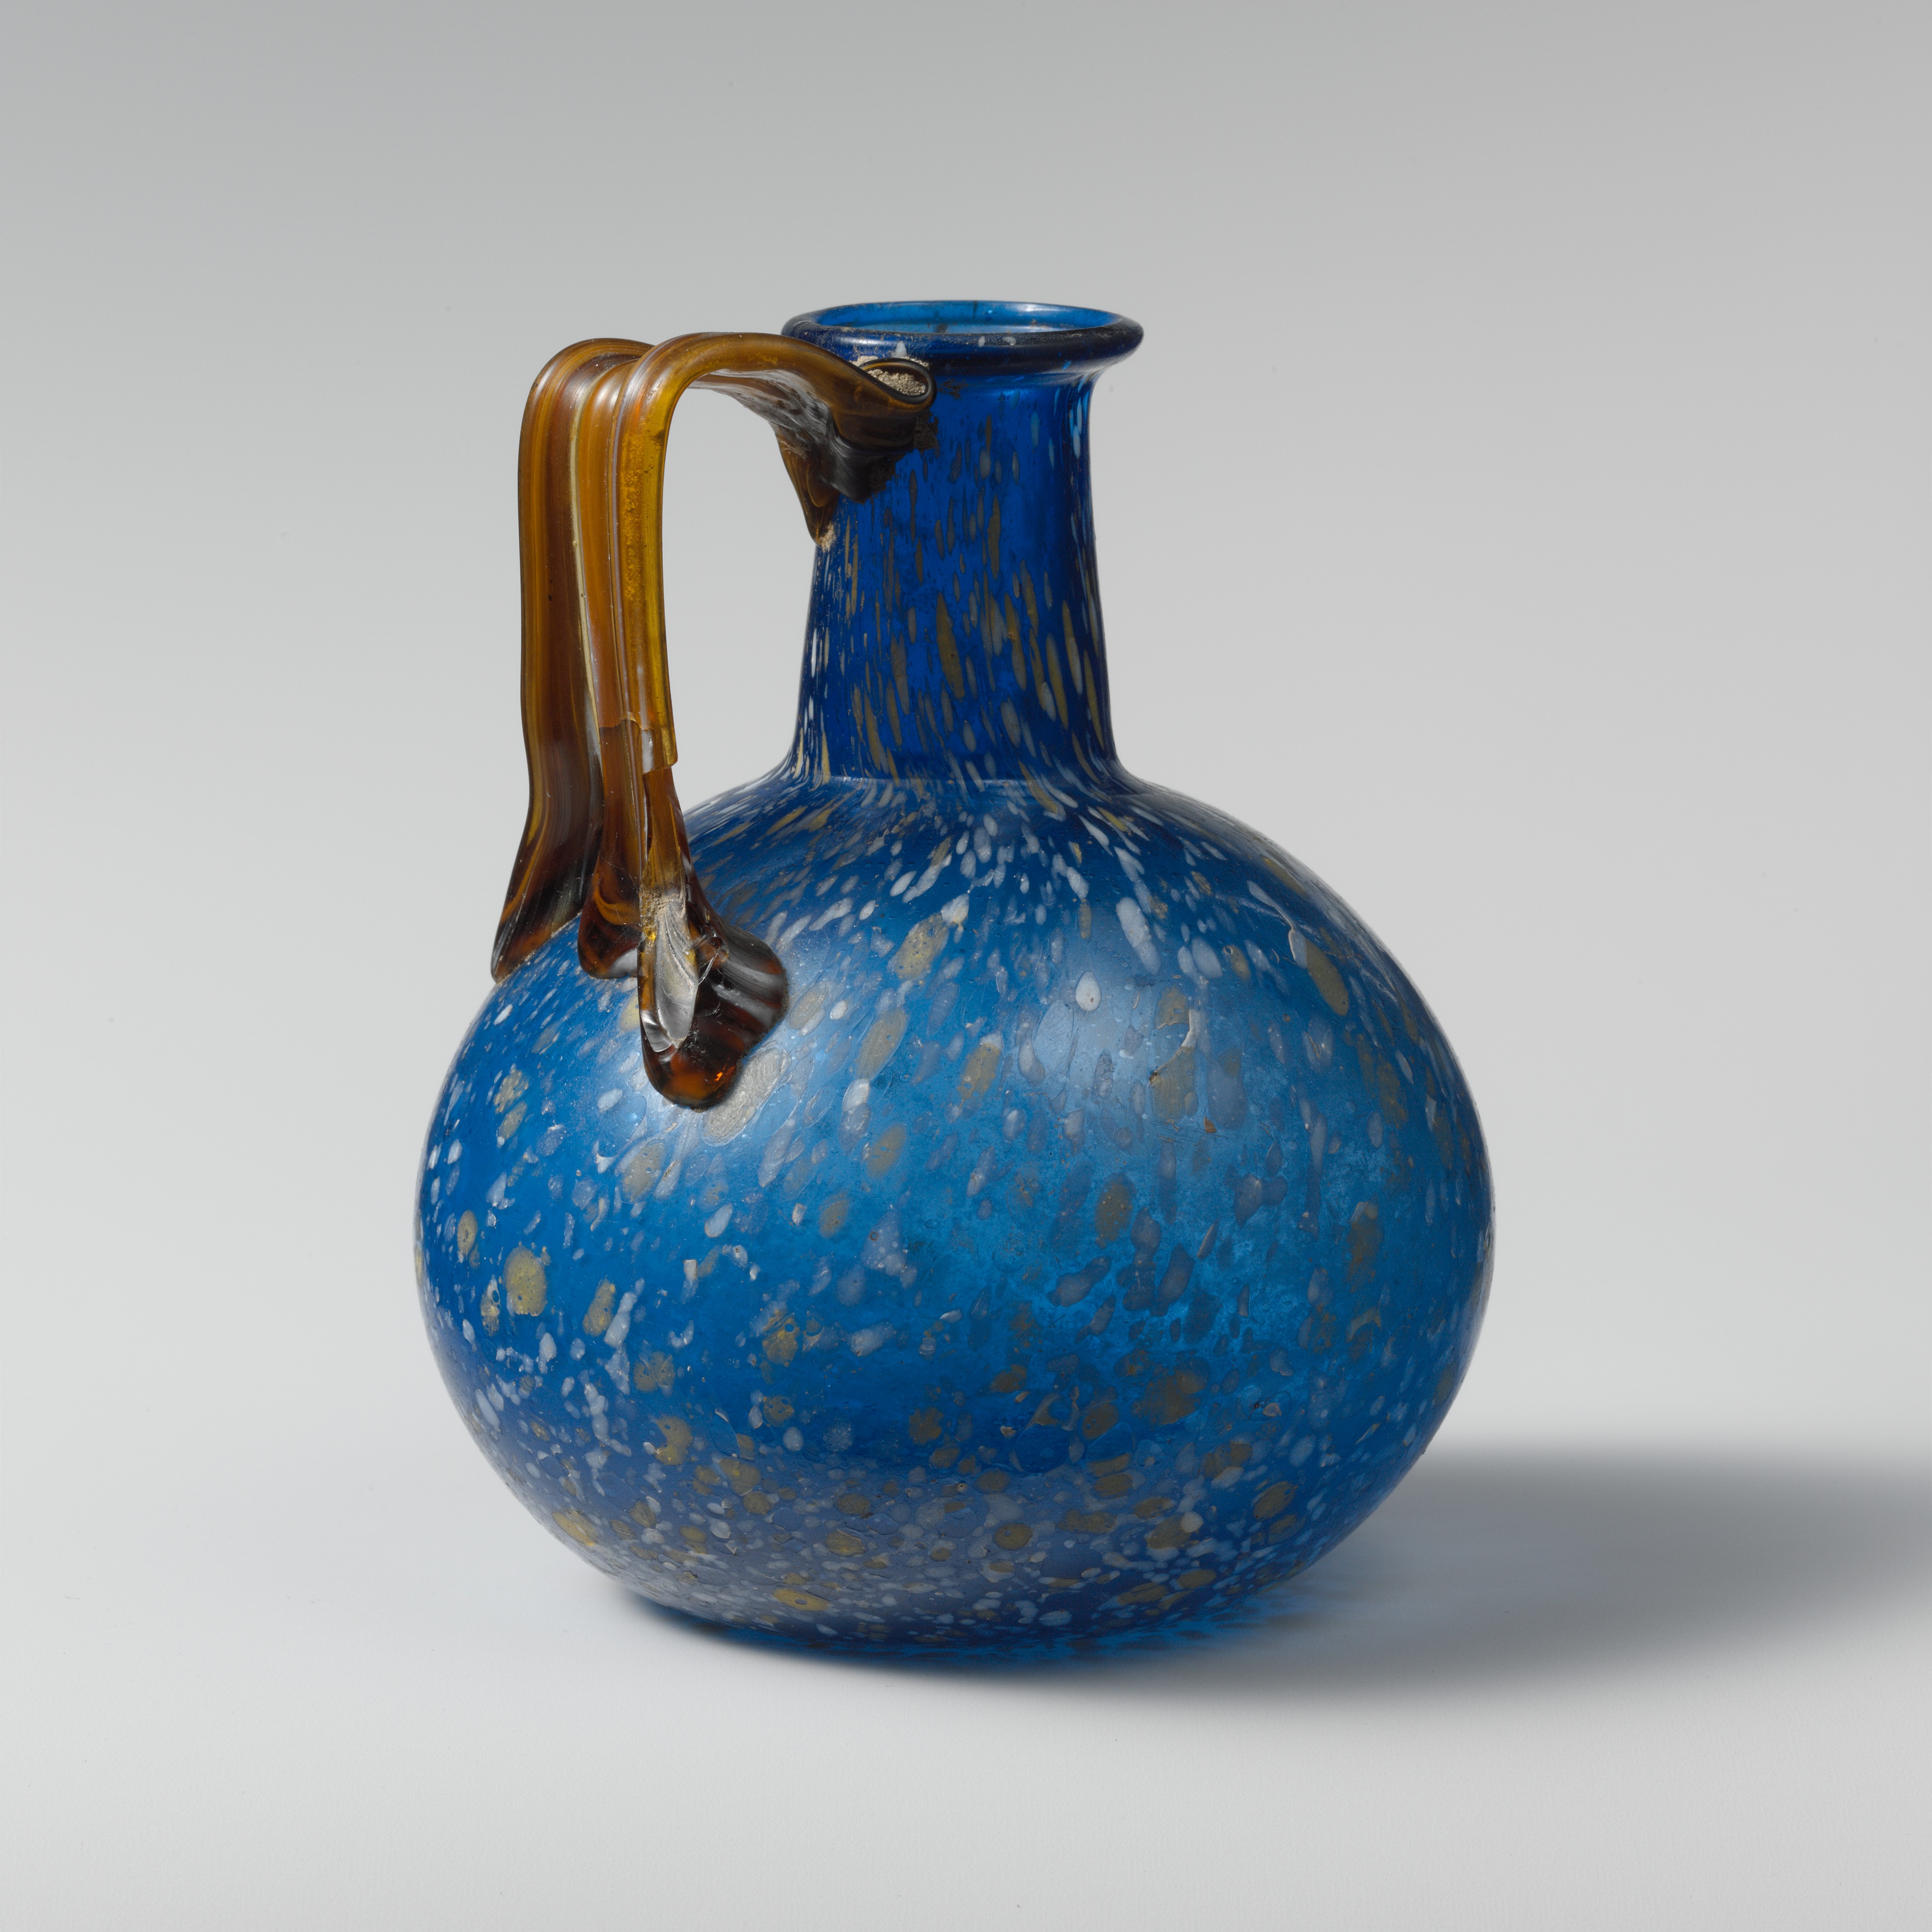 Glass jug | Roman | Early Imperial | The Metropolitan Museum of Art